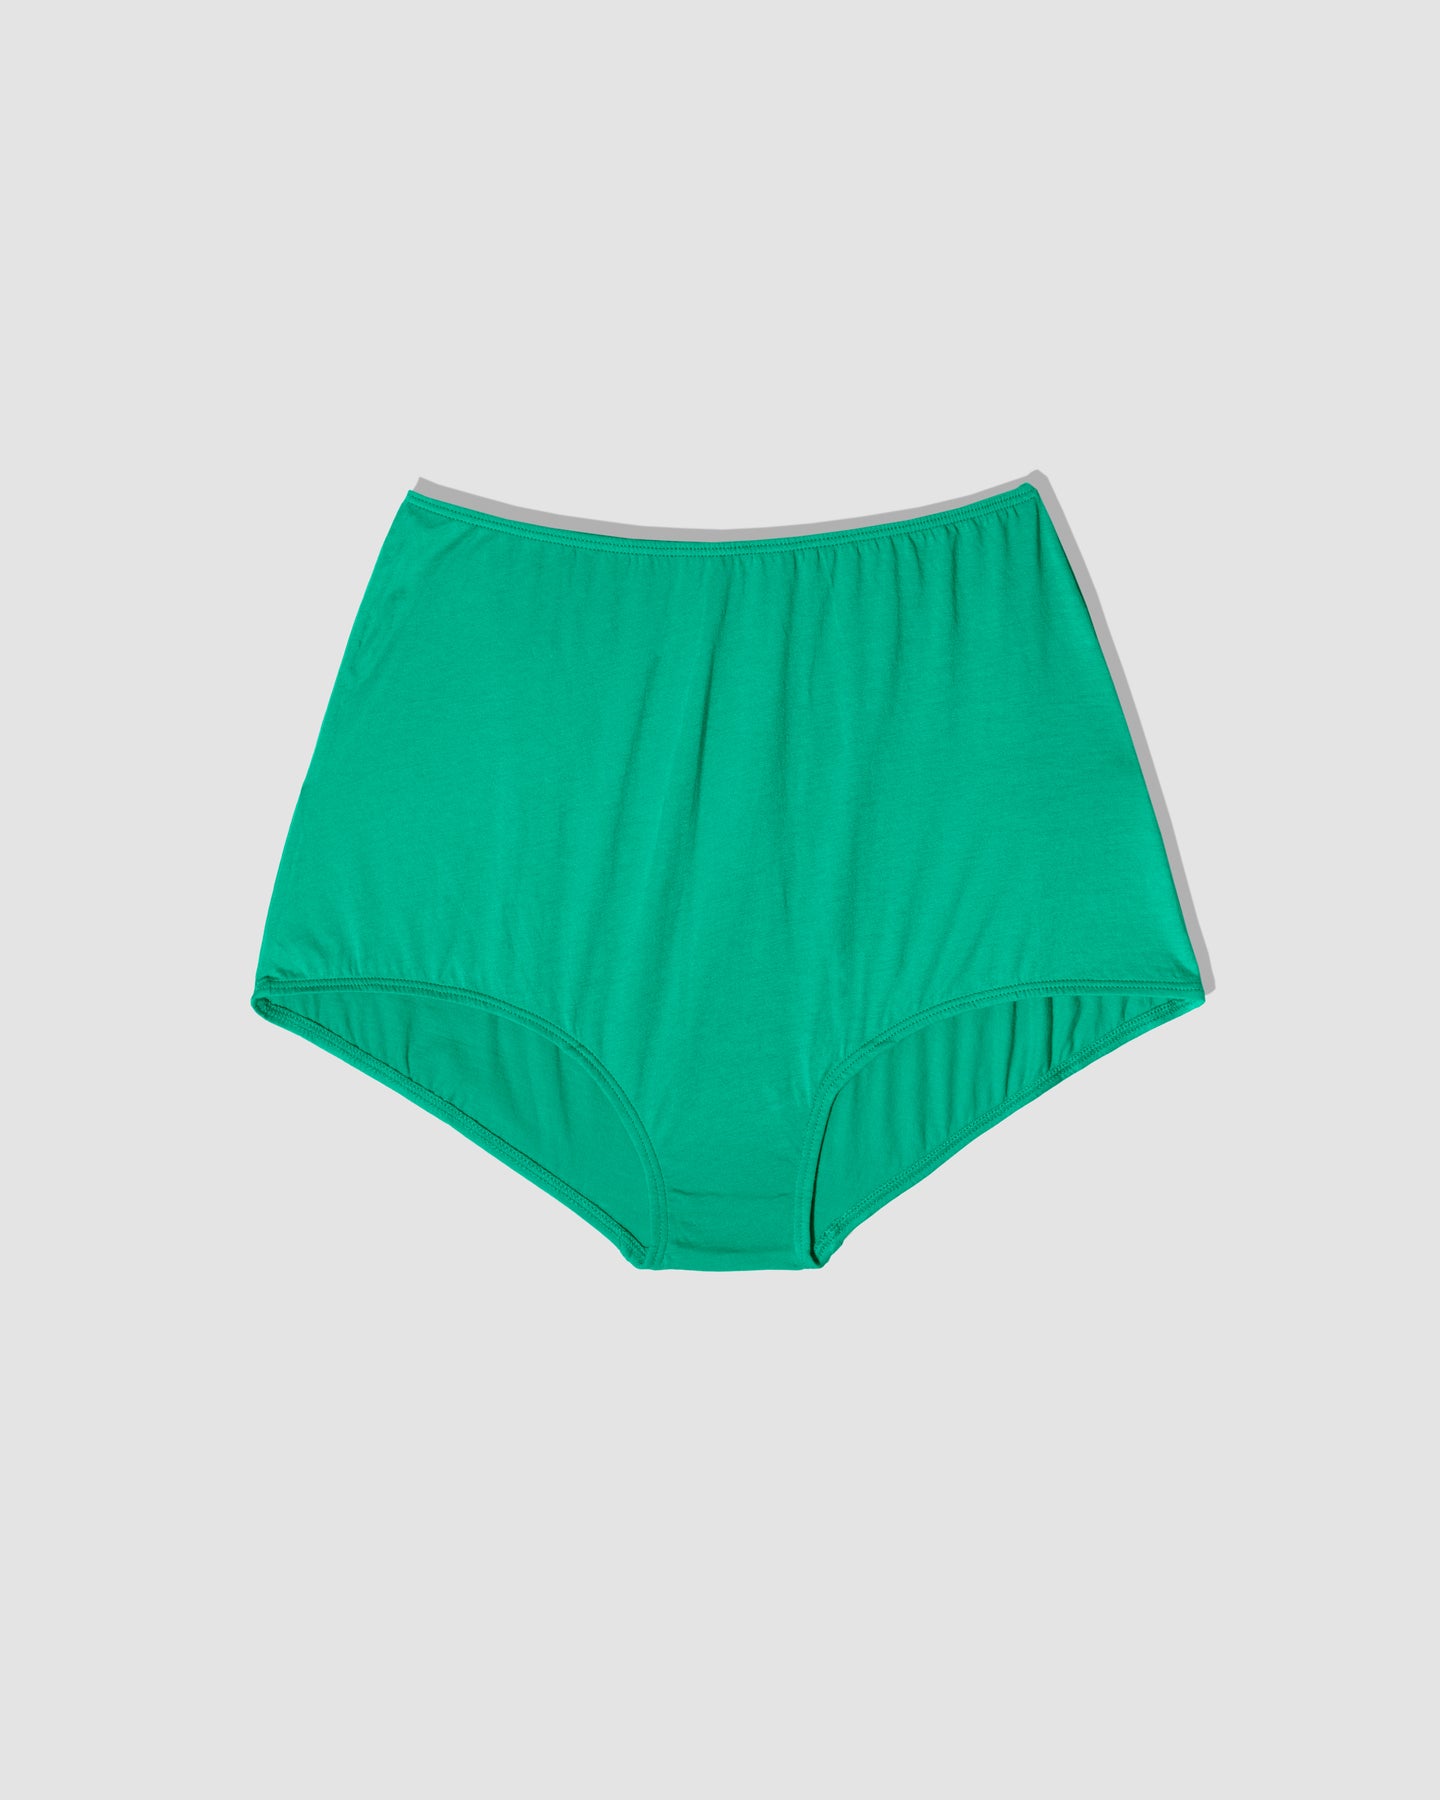 Women Underwear 100% Cotton Shorts,AXXD 5pc Solid Color Patchwork